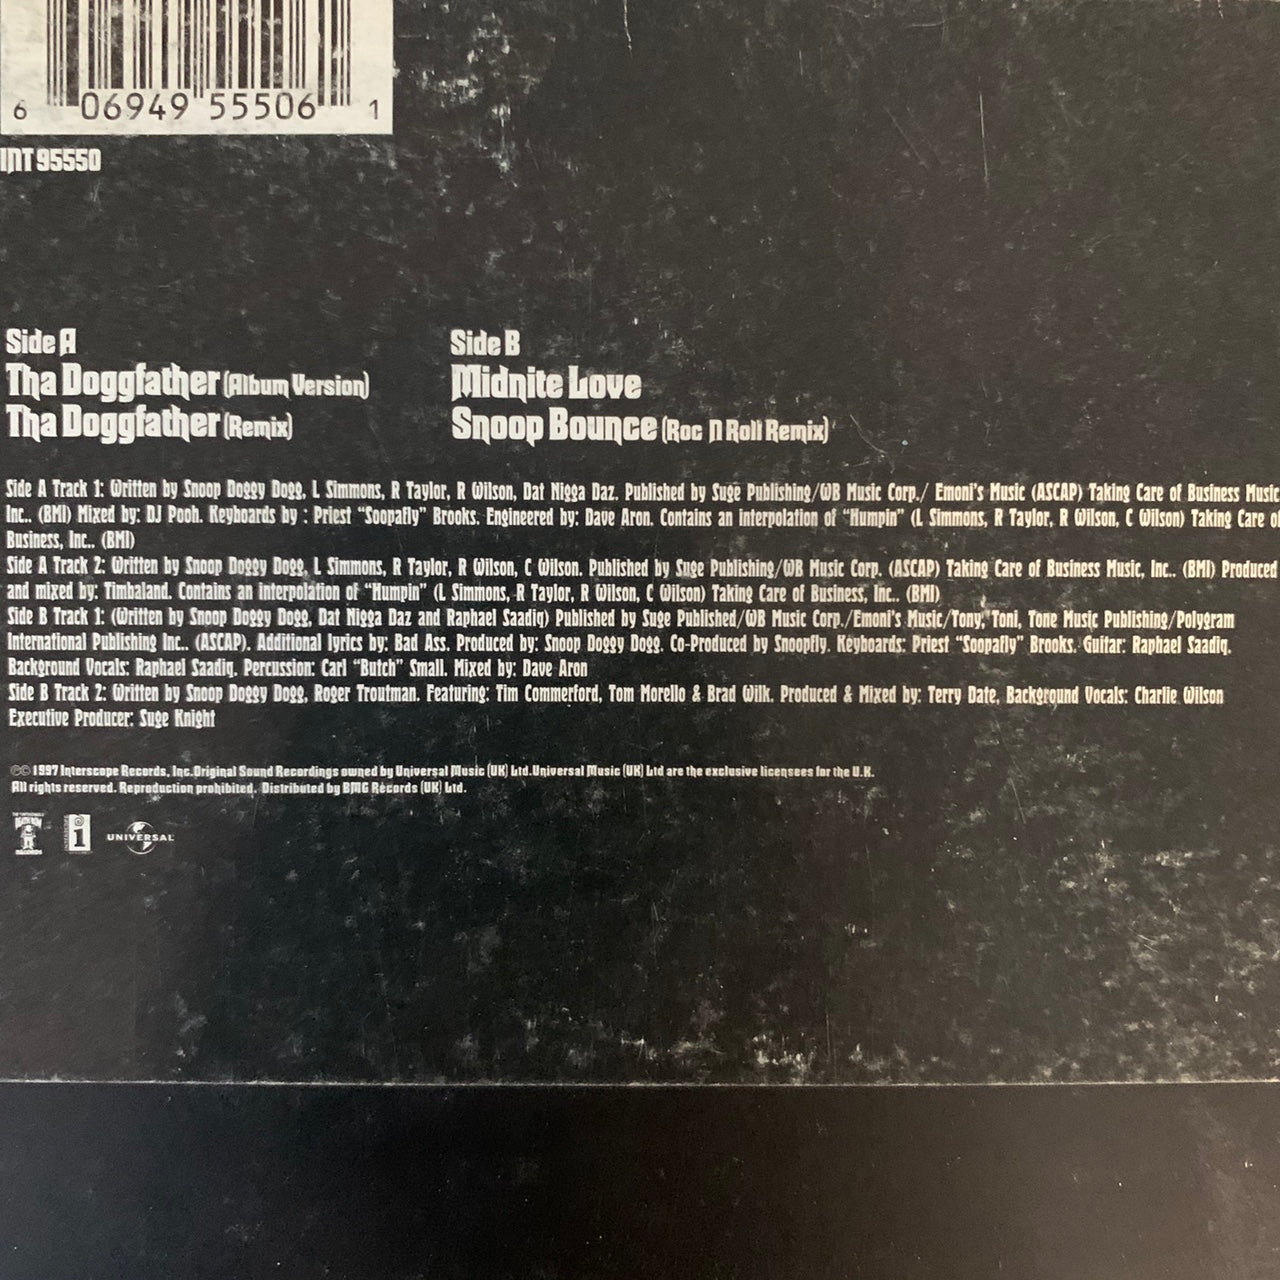 Snoop Doggy Dogg “Tha Doggfather” 4 Track 12inch Vinyl